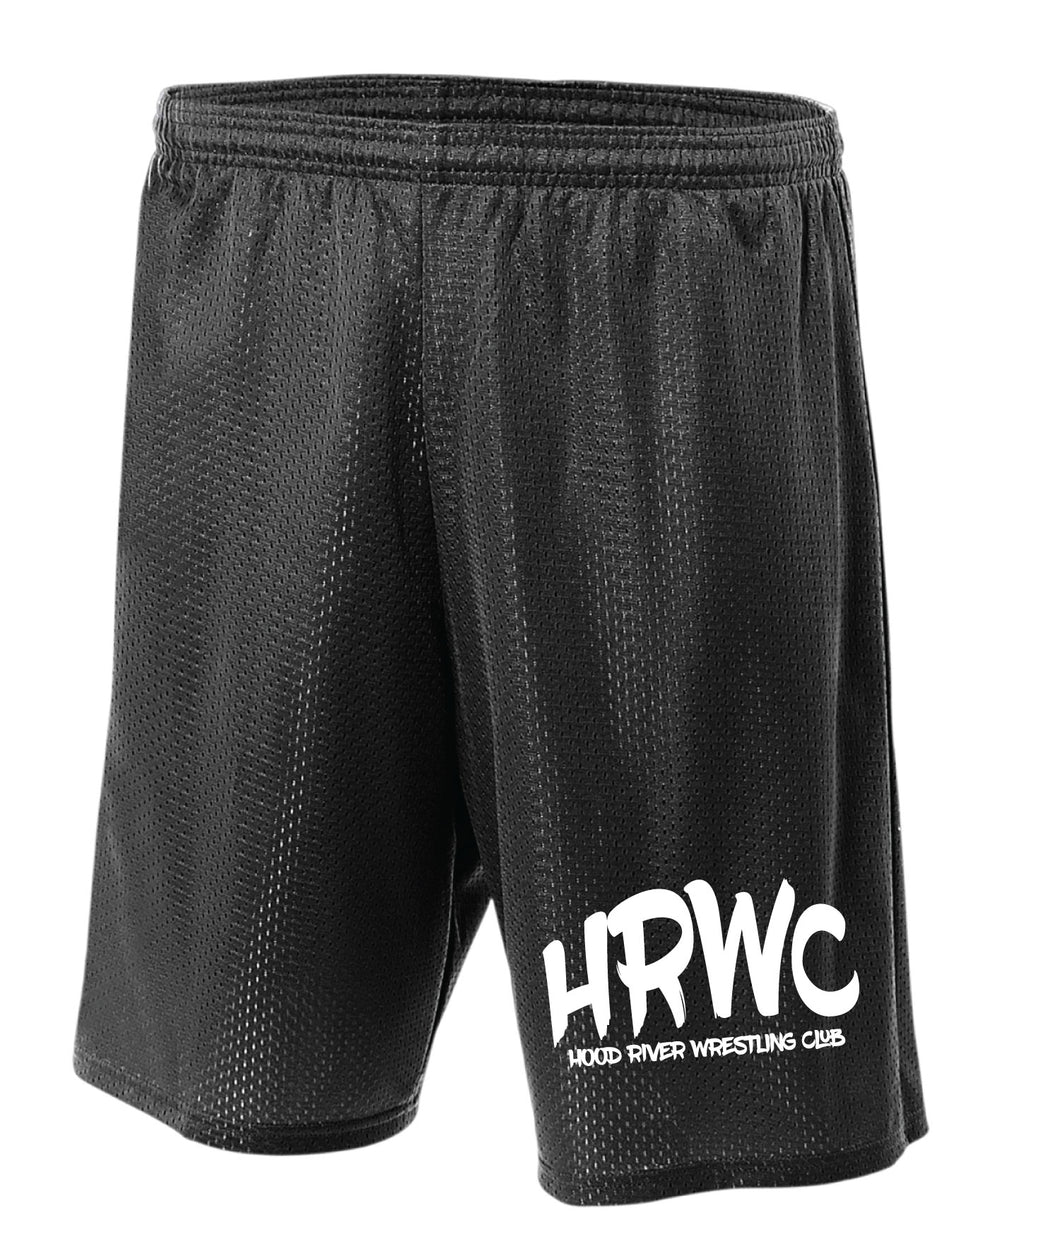 HRWC Tech Shorts - 5KounT